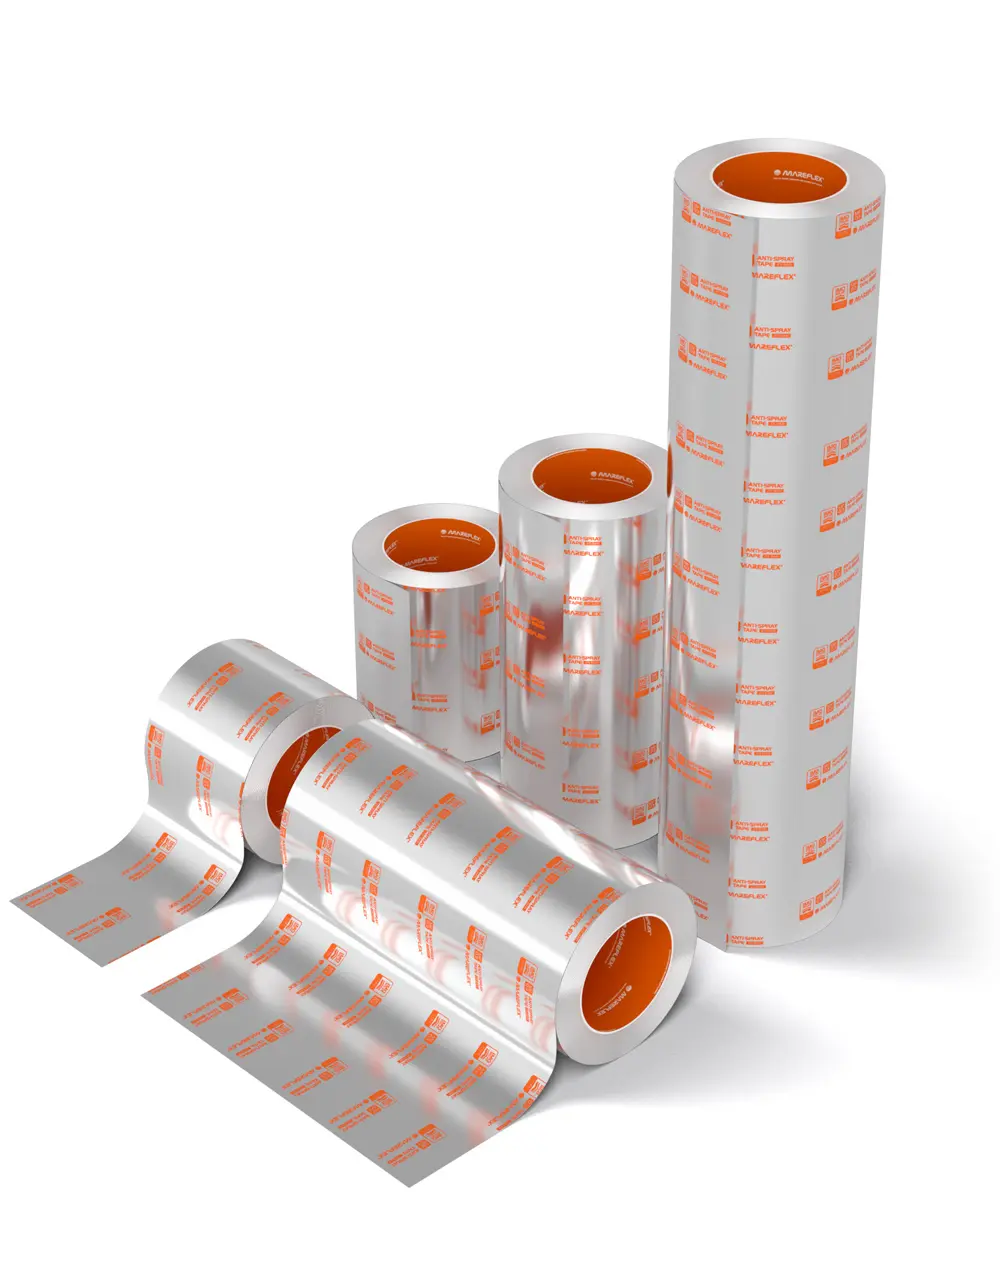 five rolls of antispray tape for antisplashing antisplashing